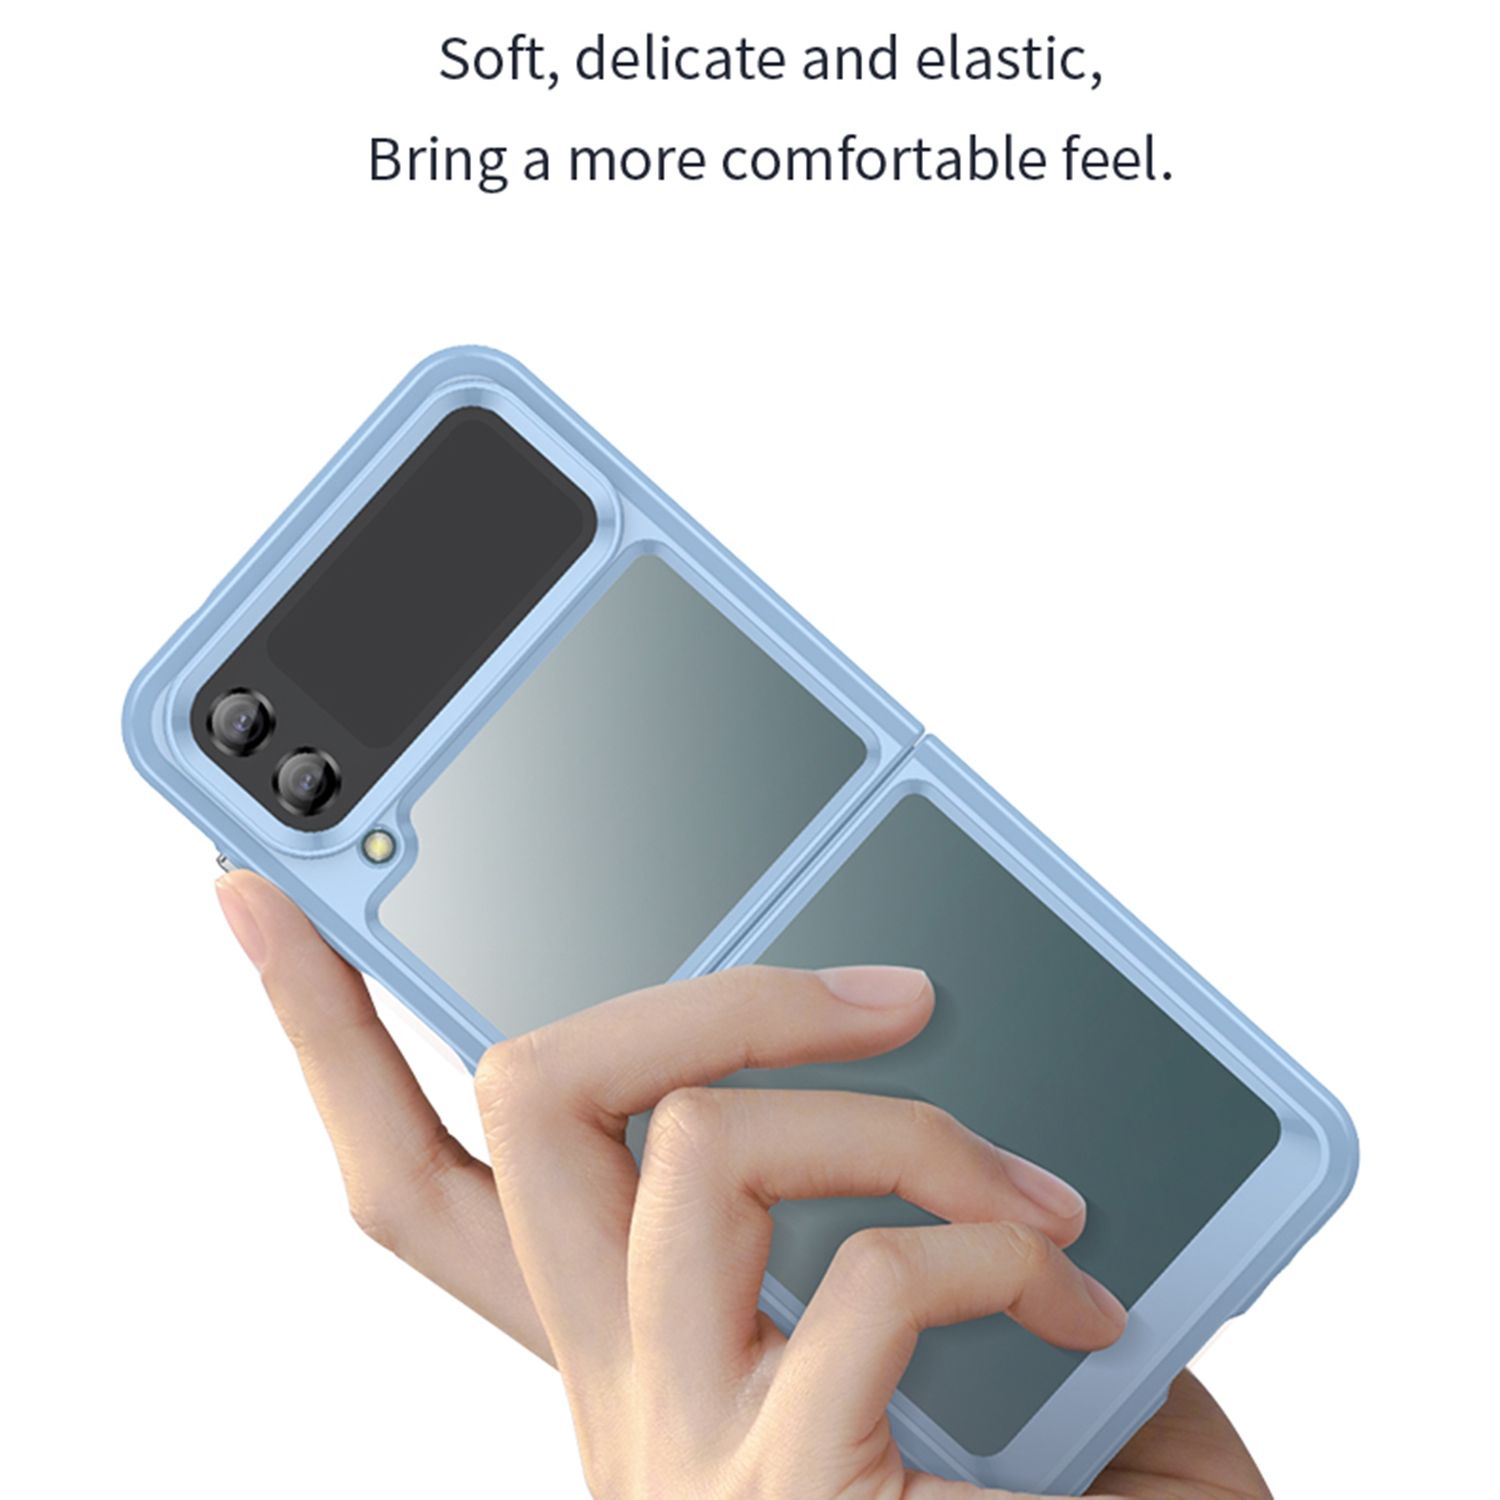 5G, Blau Flip4 KÖNIG Samsung, Backcover, DESIGN Transparent Case, Z Galaxy